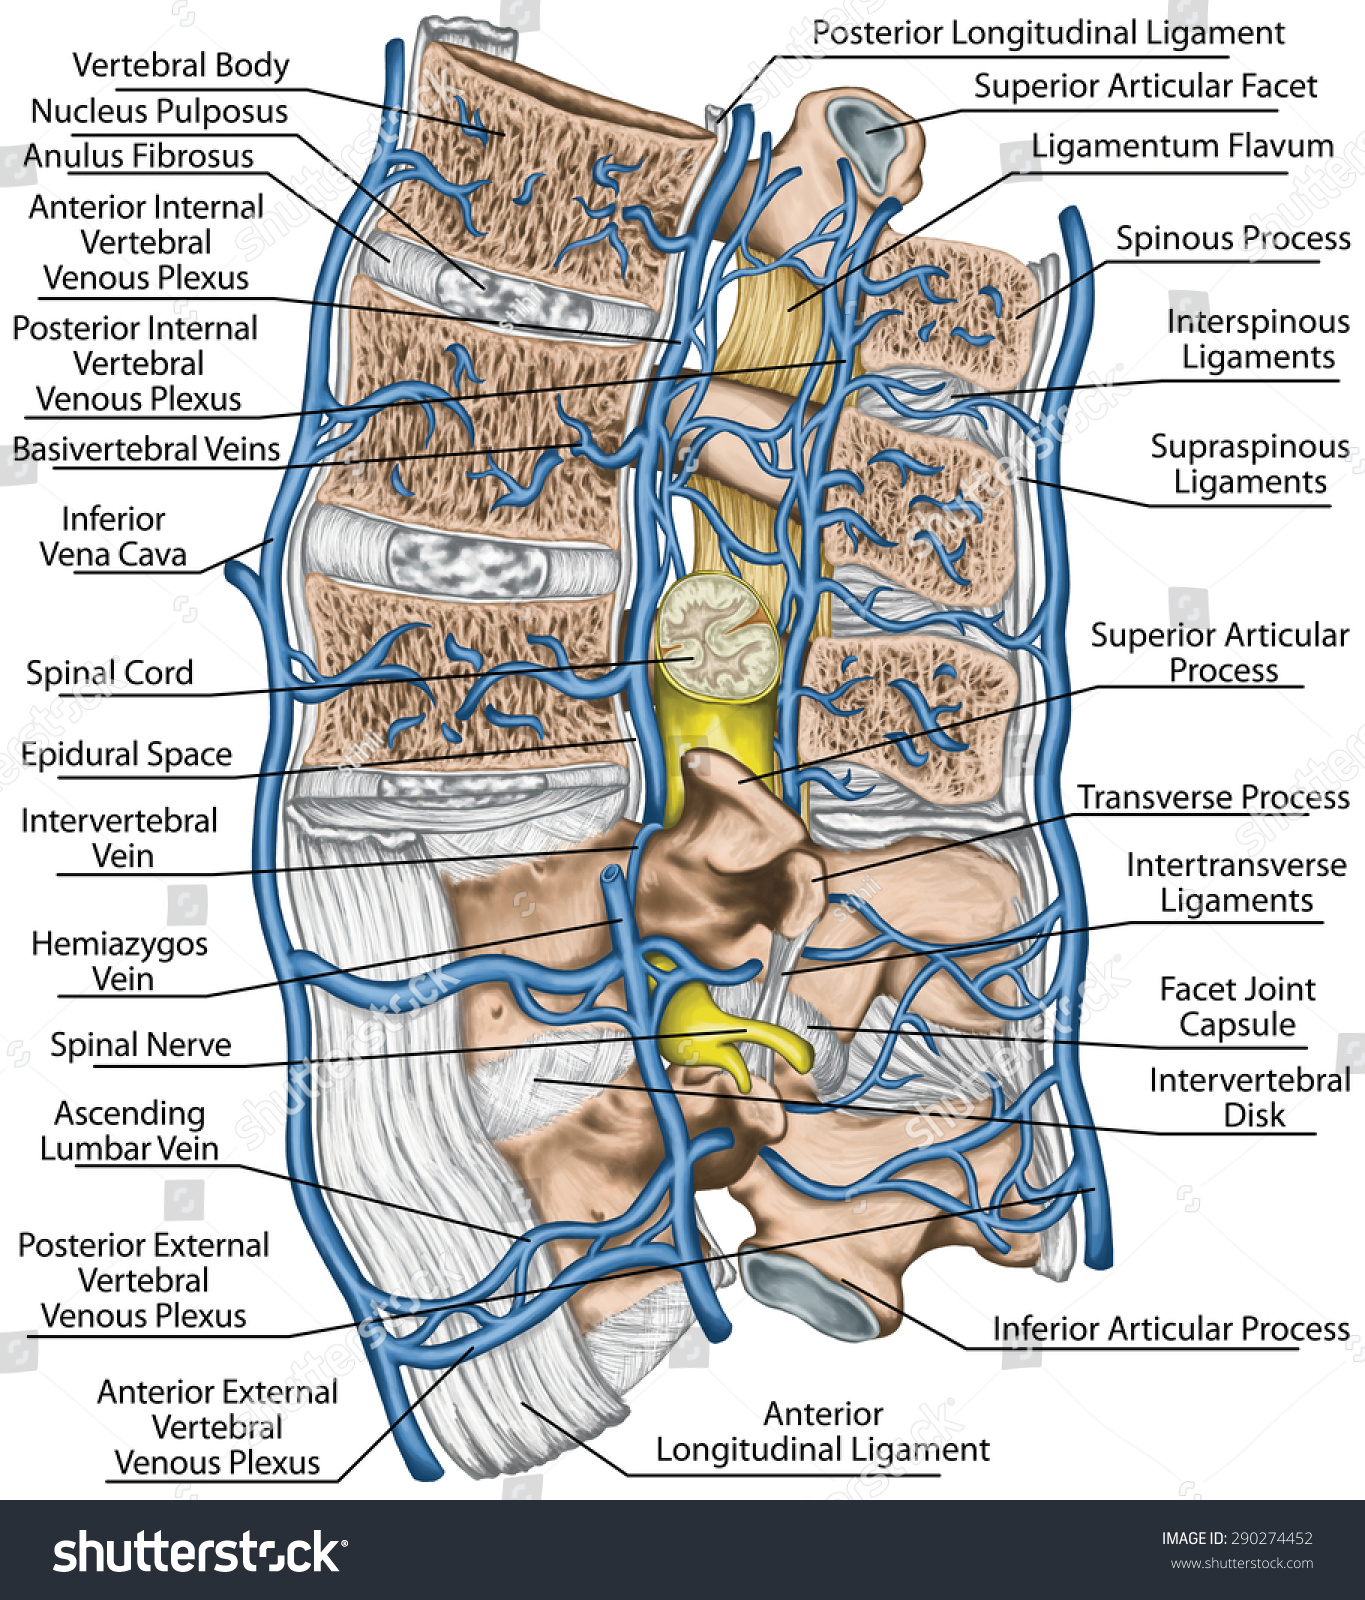 Venous Plexus Spine